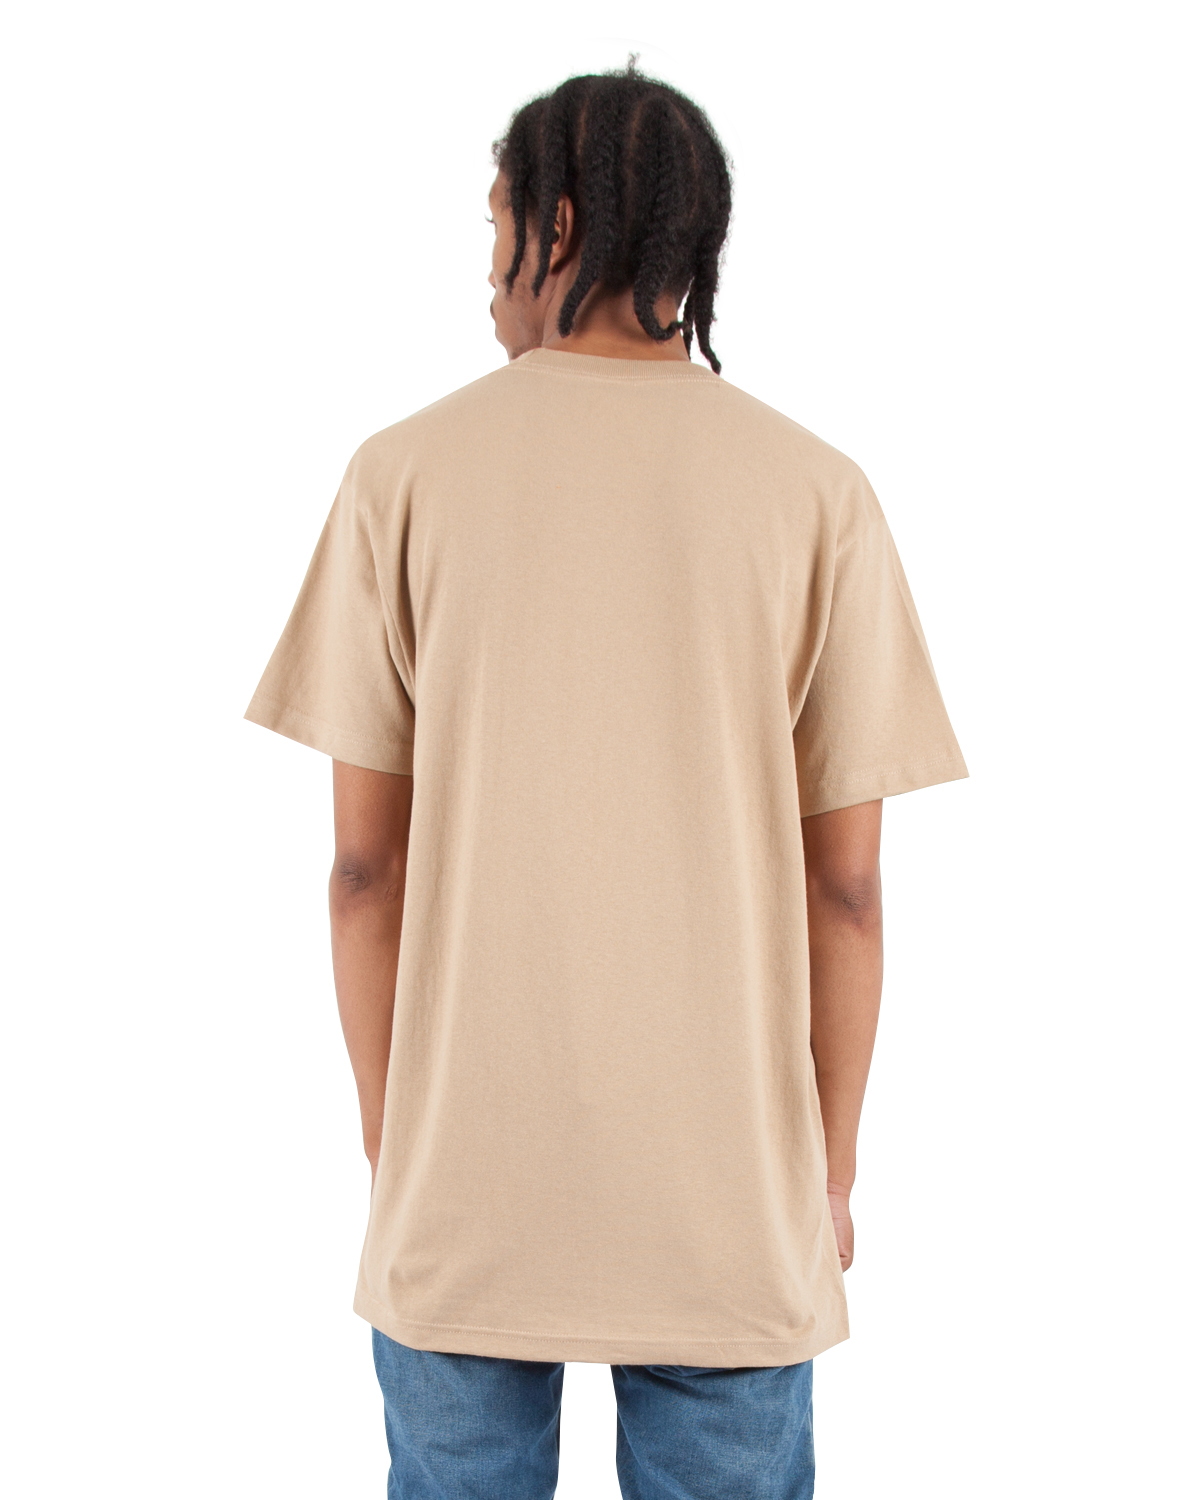 Shaka Wear Shass Adult 6 Oz., Active Short Sleeve Crewneck T Shirt